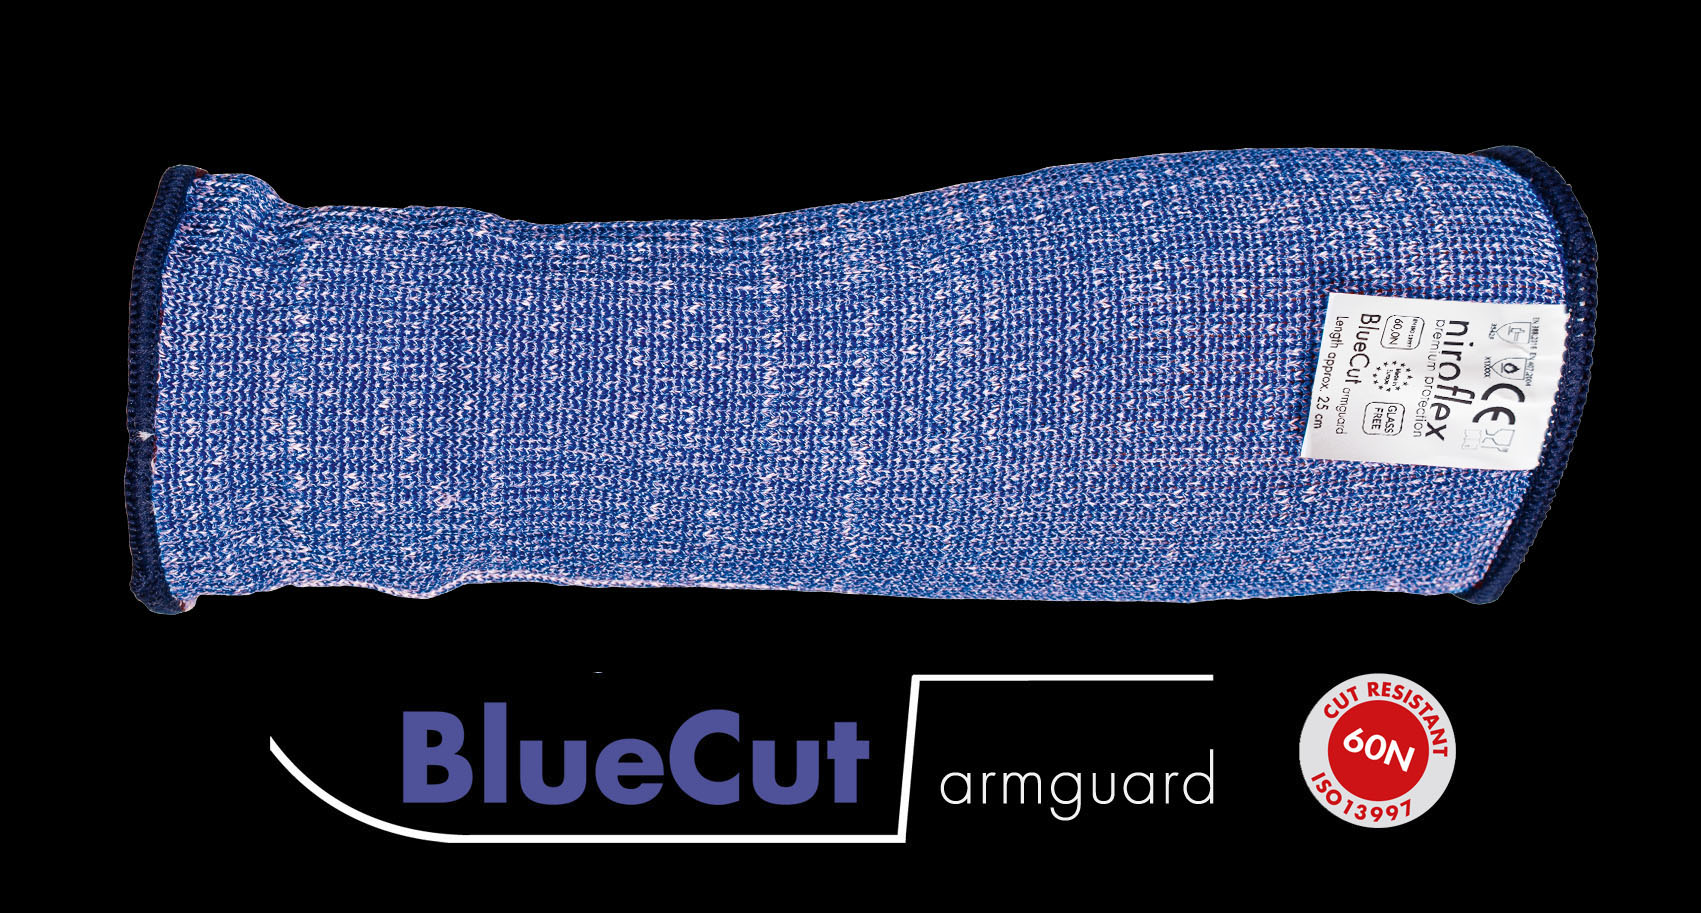 BlueCut advance armguard